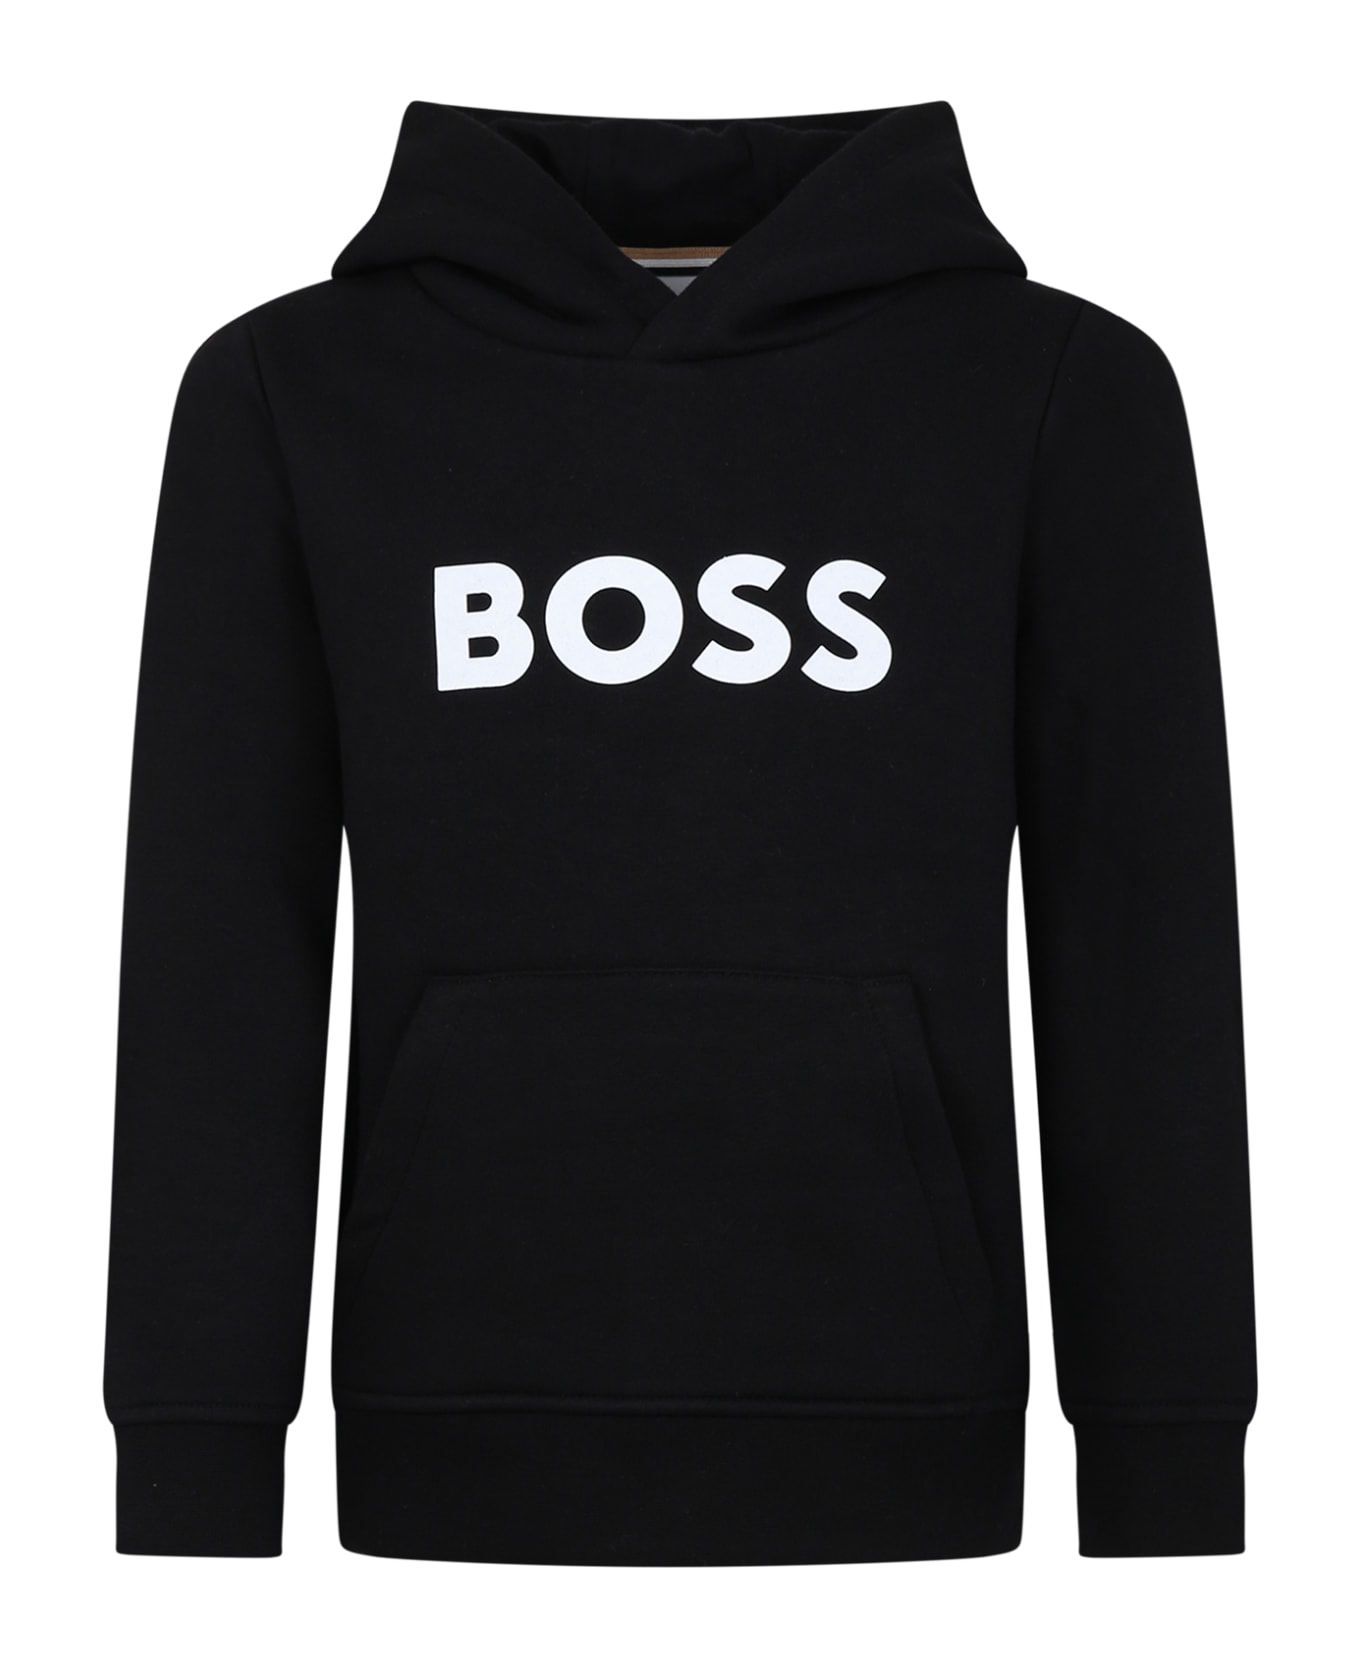 Hugo Boss Black Sweatshirt For Boy With Logo - Nero